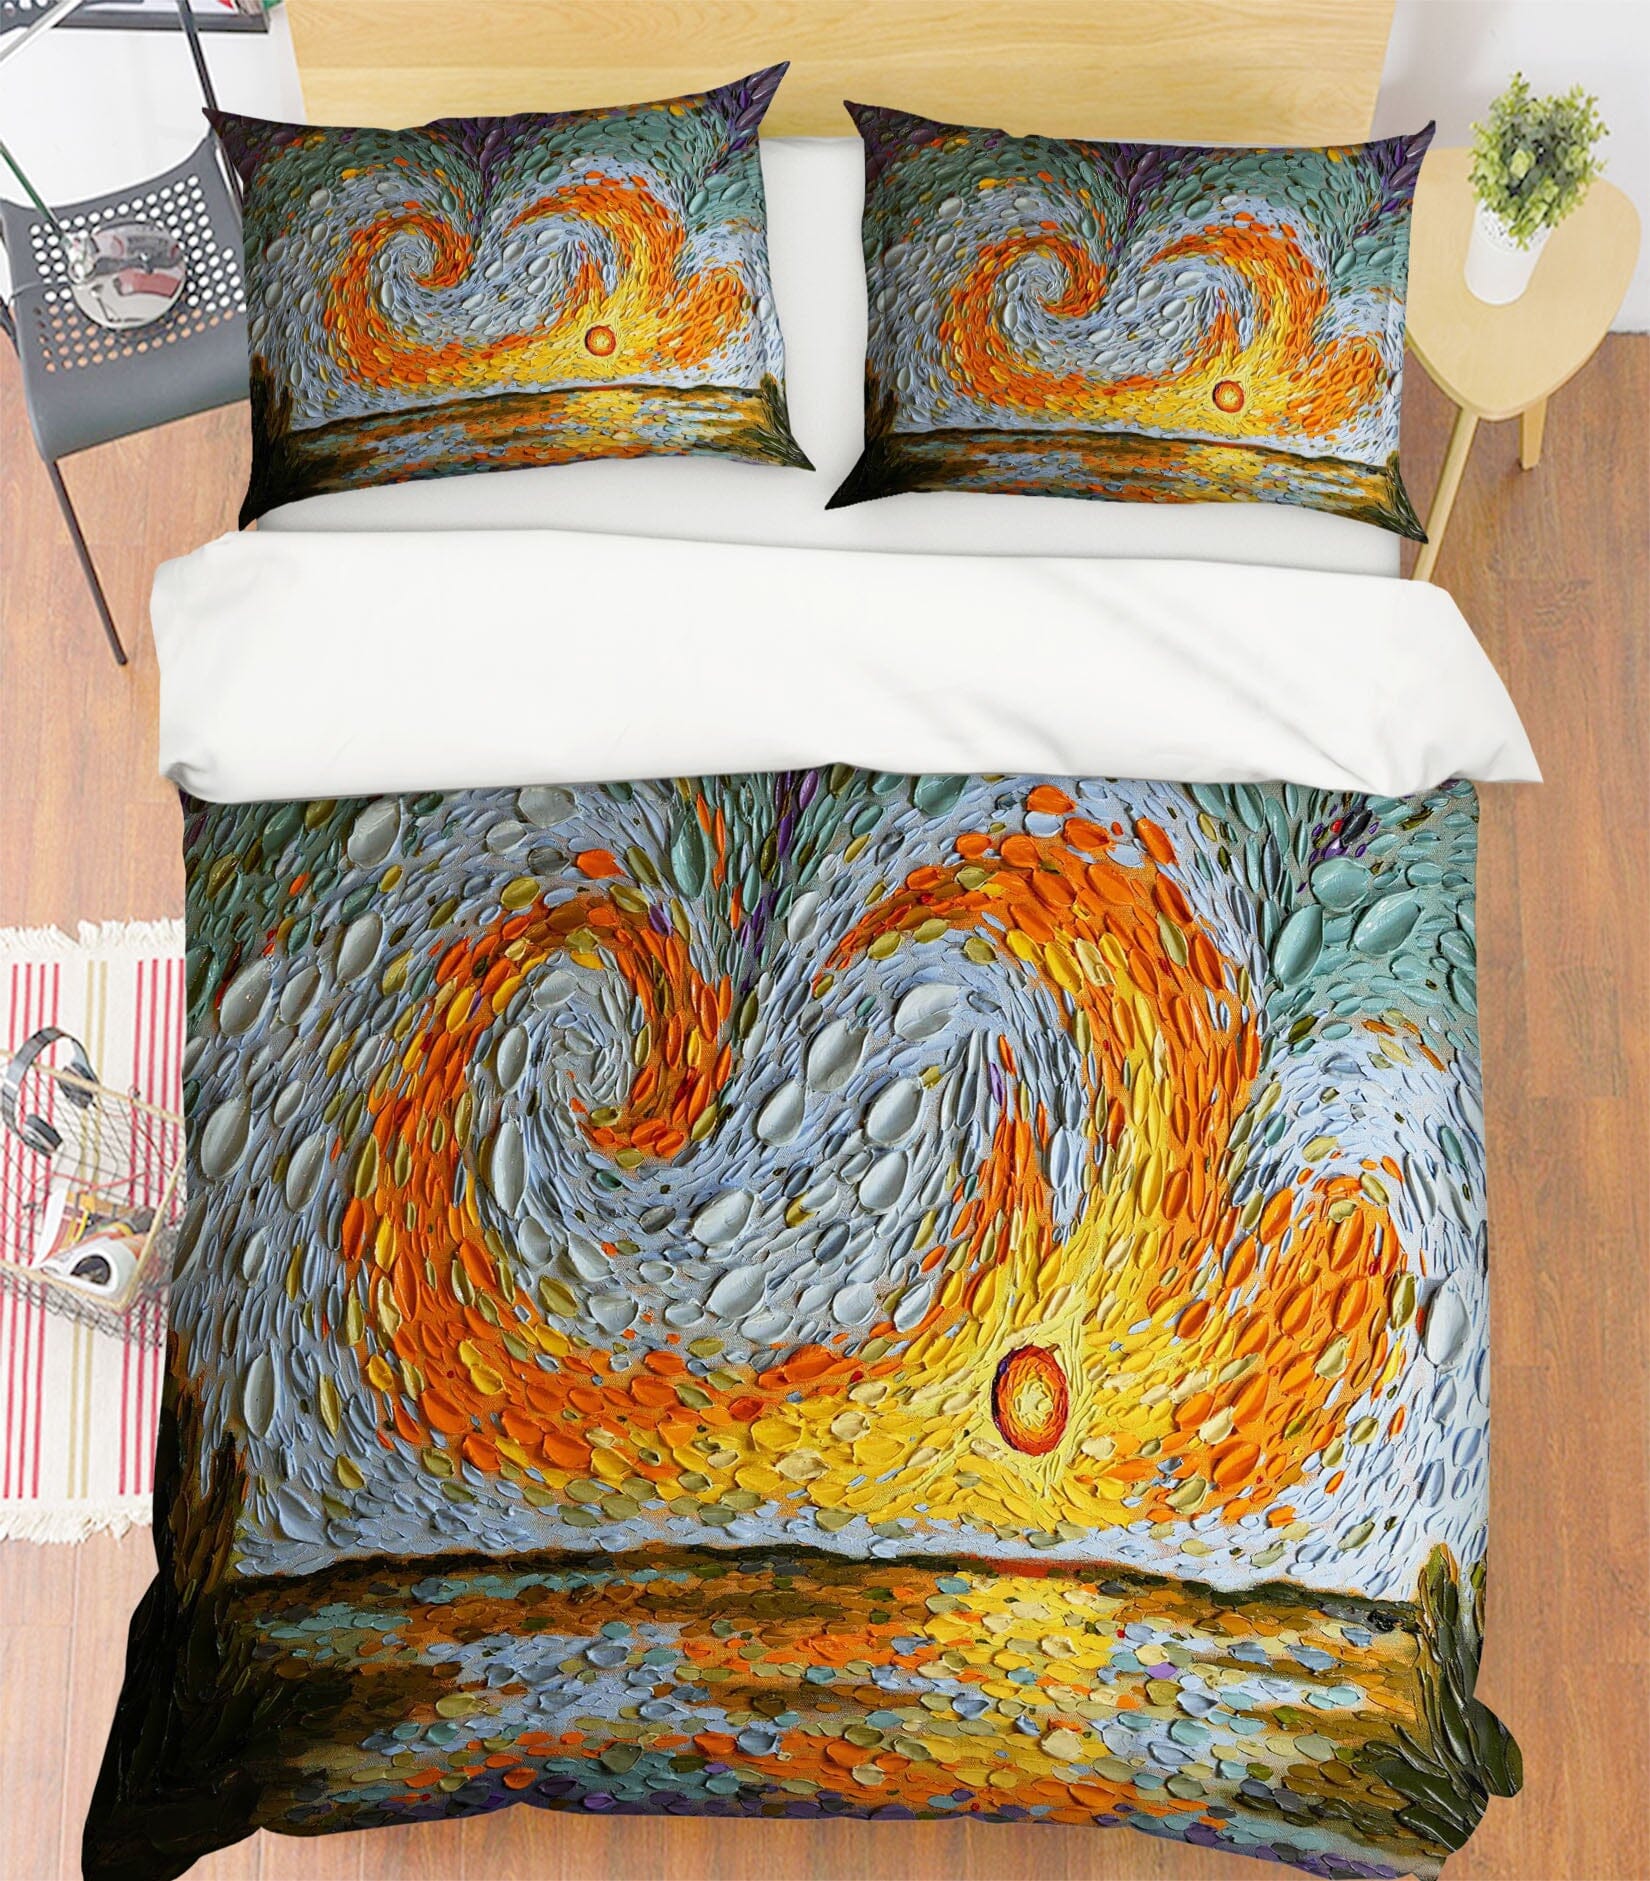 3D Phoenix 2107 Dena Tollefson bedding Bed Pillowcases Quilt Quiet Covers AJ Creativity Home 